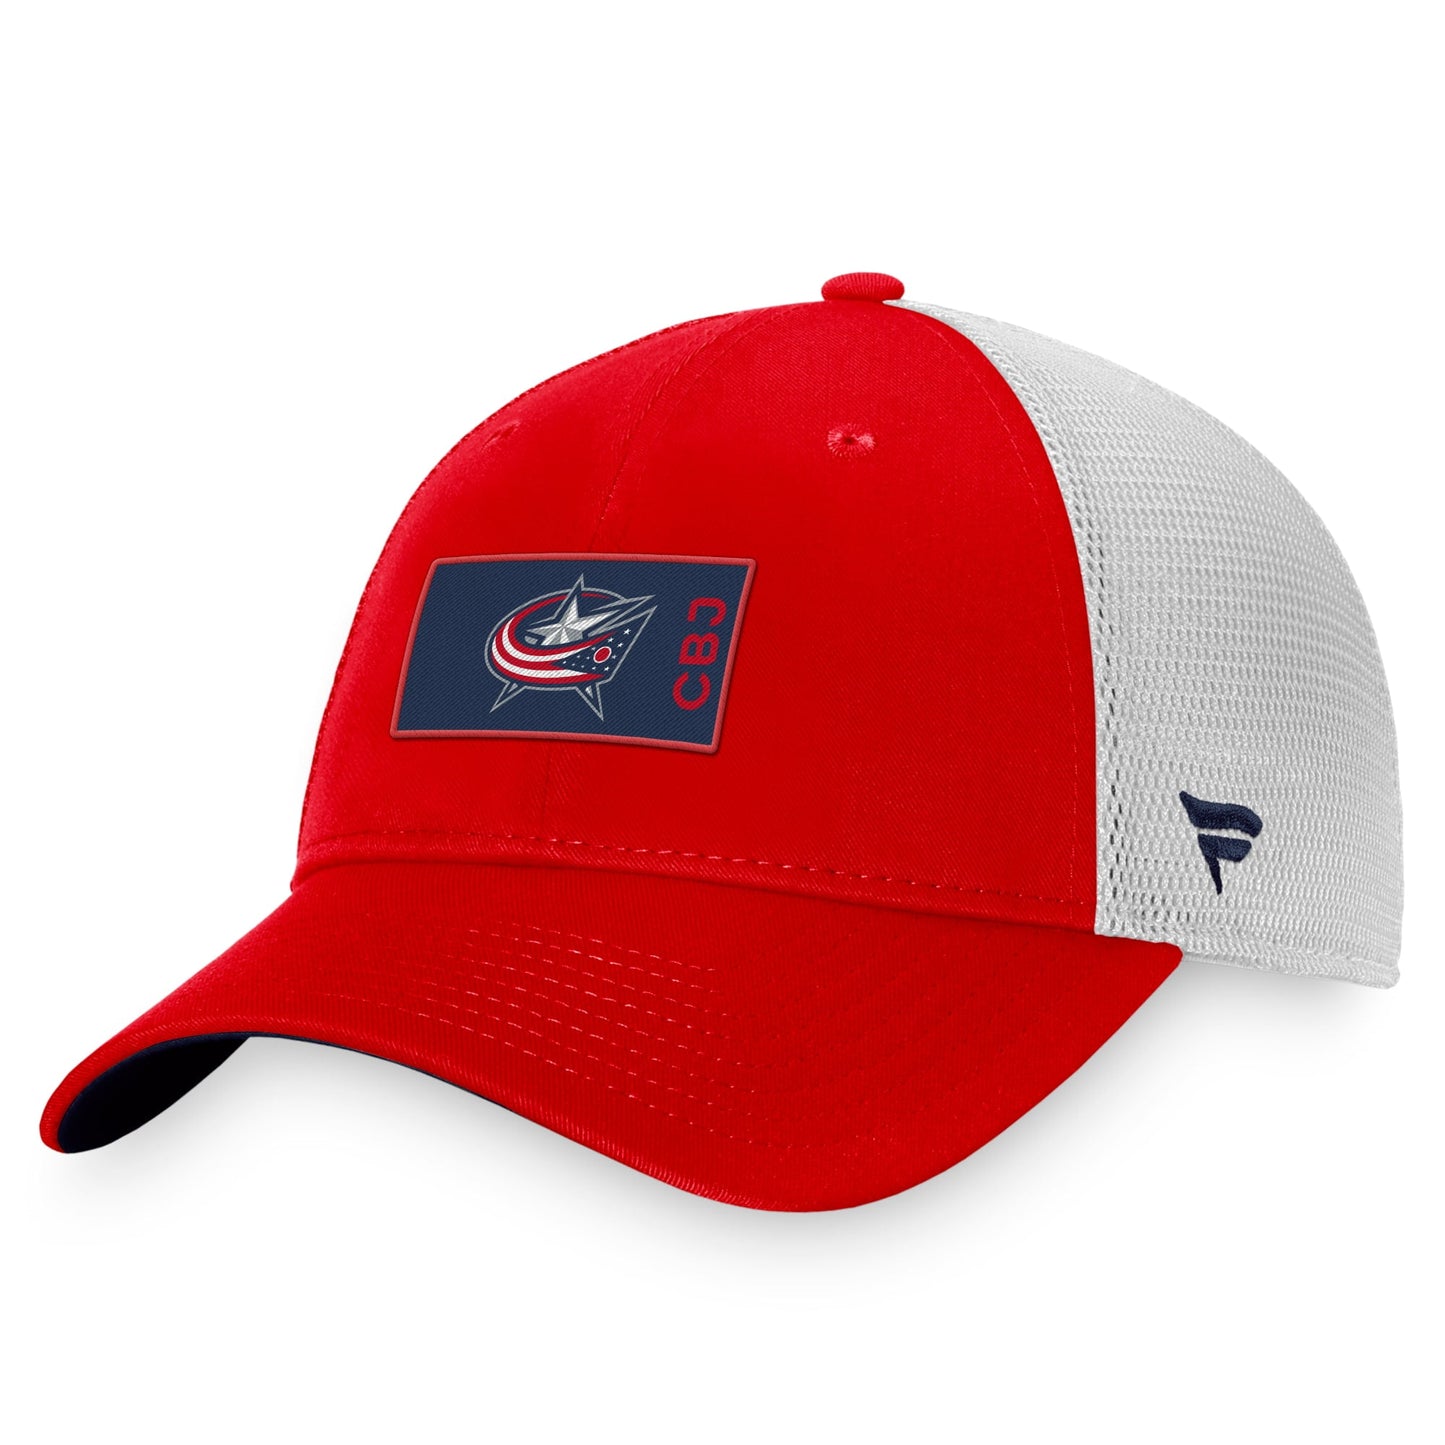 Men's Fanatics Branded Red/White Columbus Blue Jackets Authentic Pro Rink Trucker Snapback Hat - OSFA